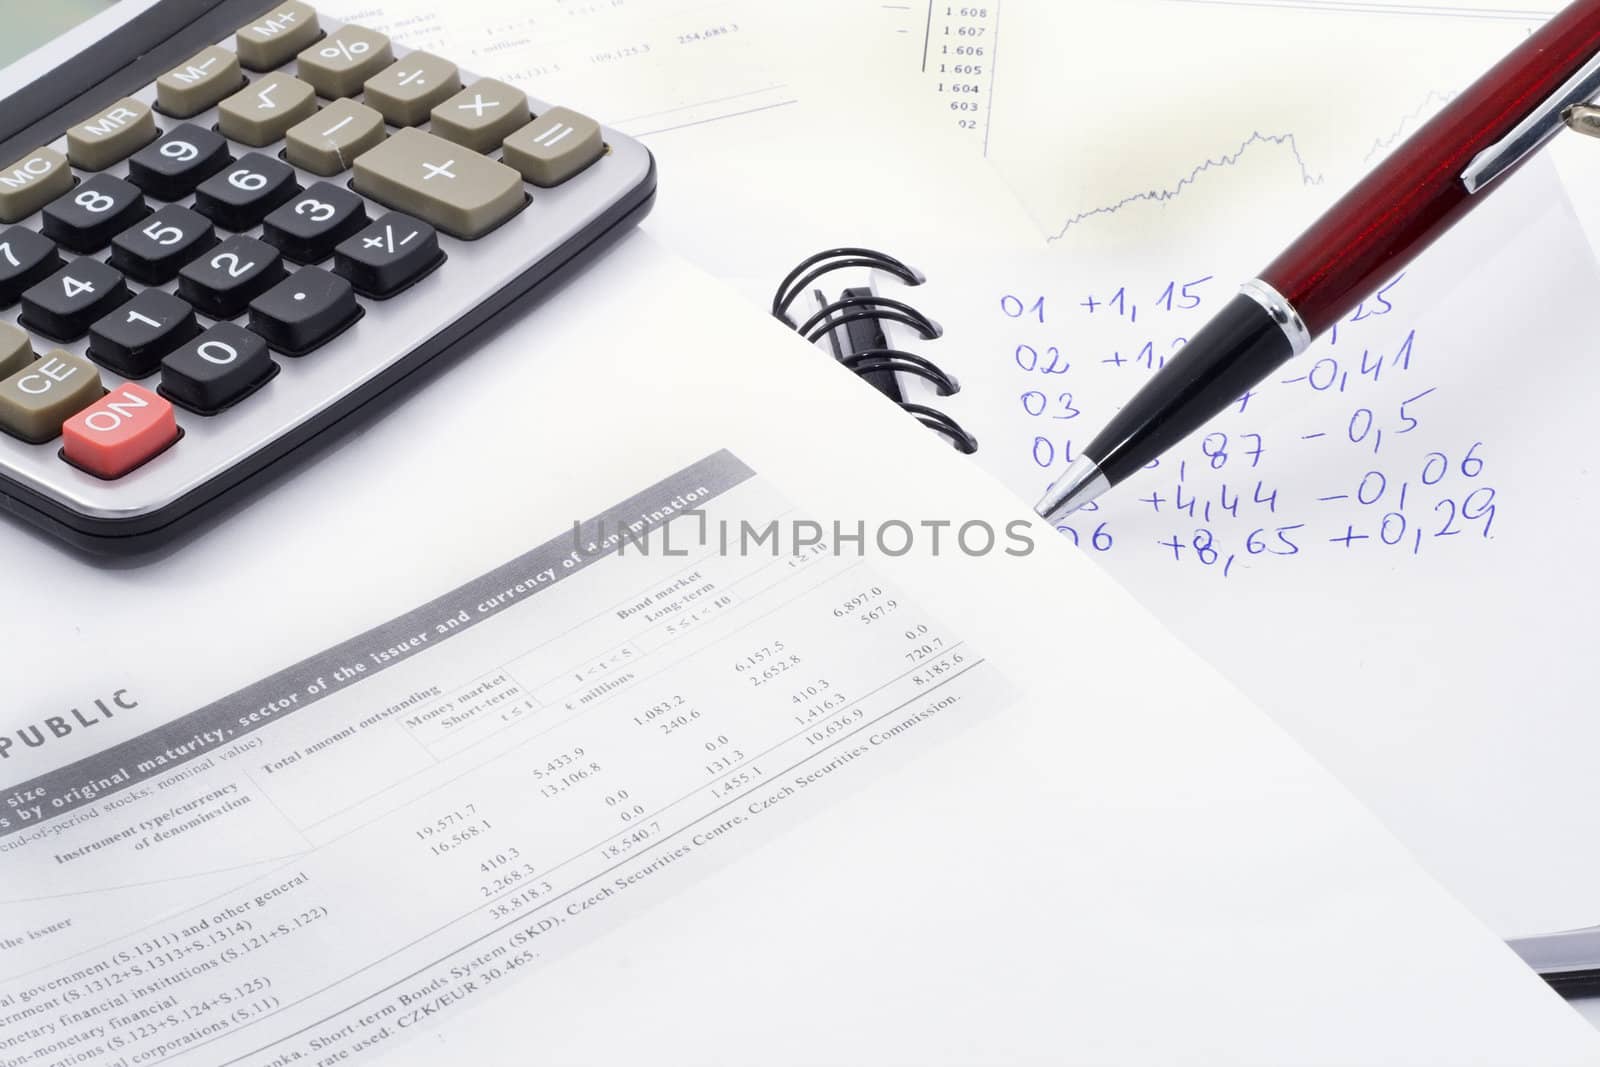 difficult financial calculations - economics background - close up